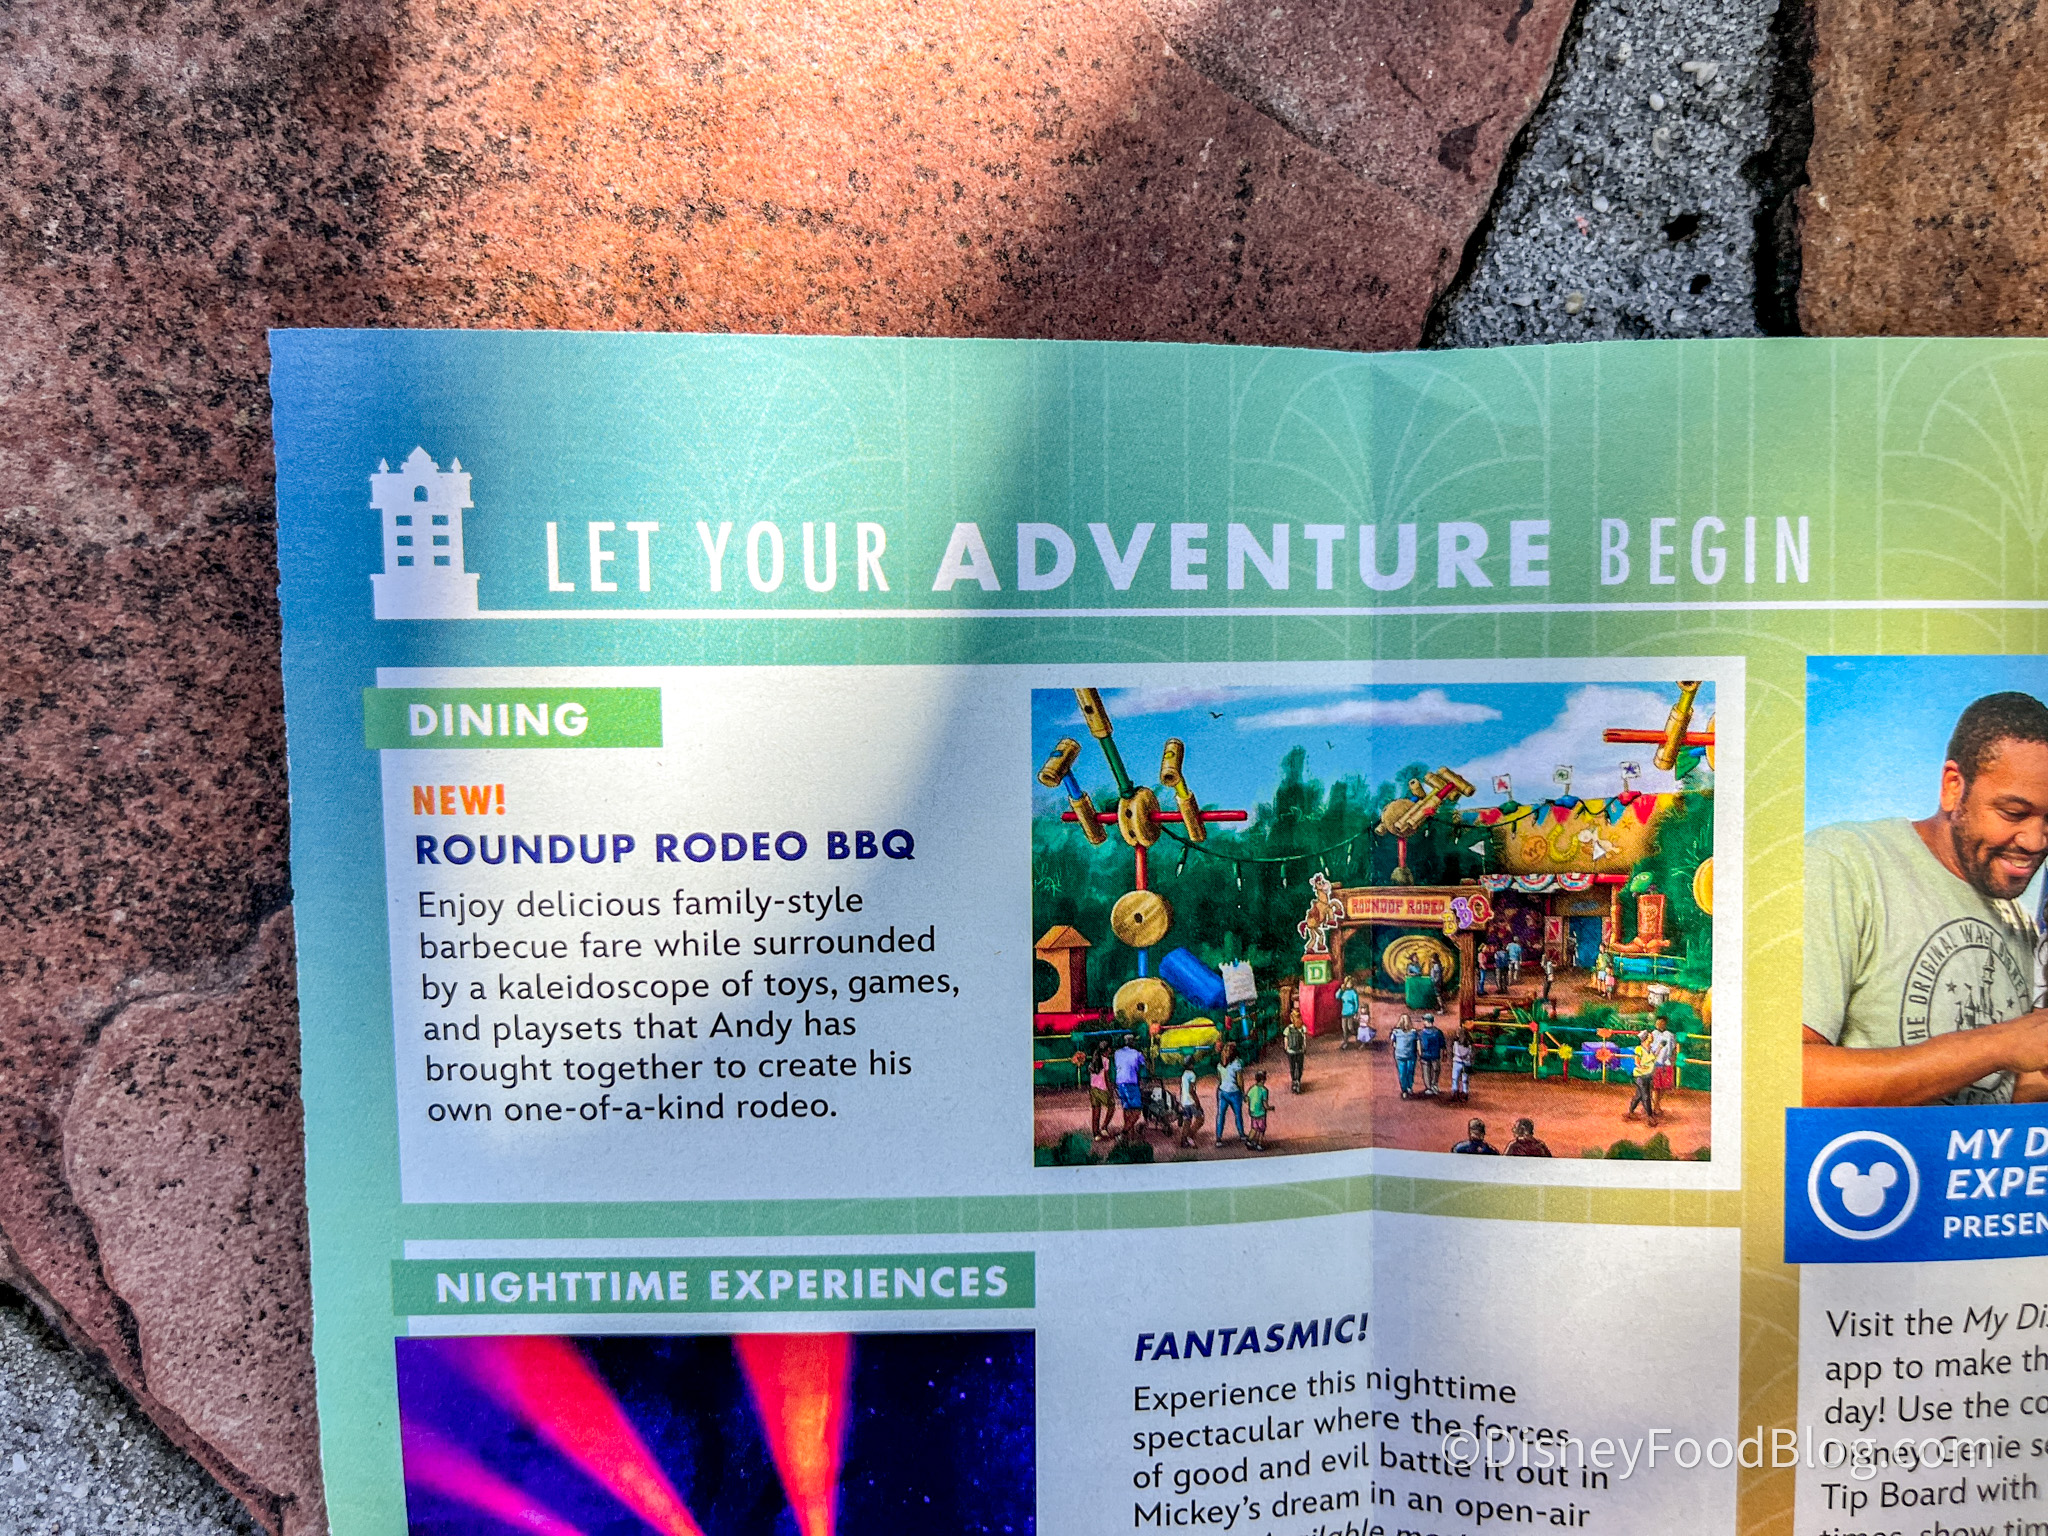 Universal Studios Islands of Adventure - 2011 Park Map